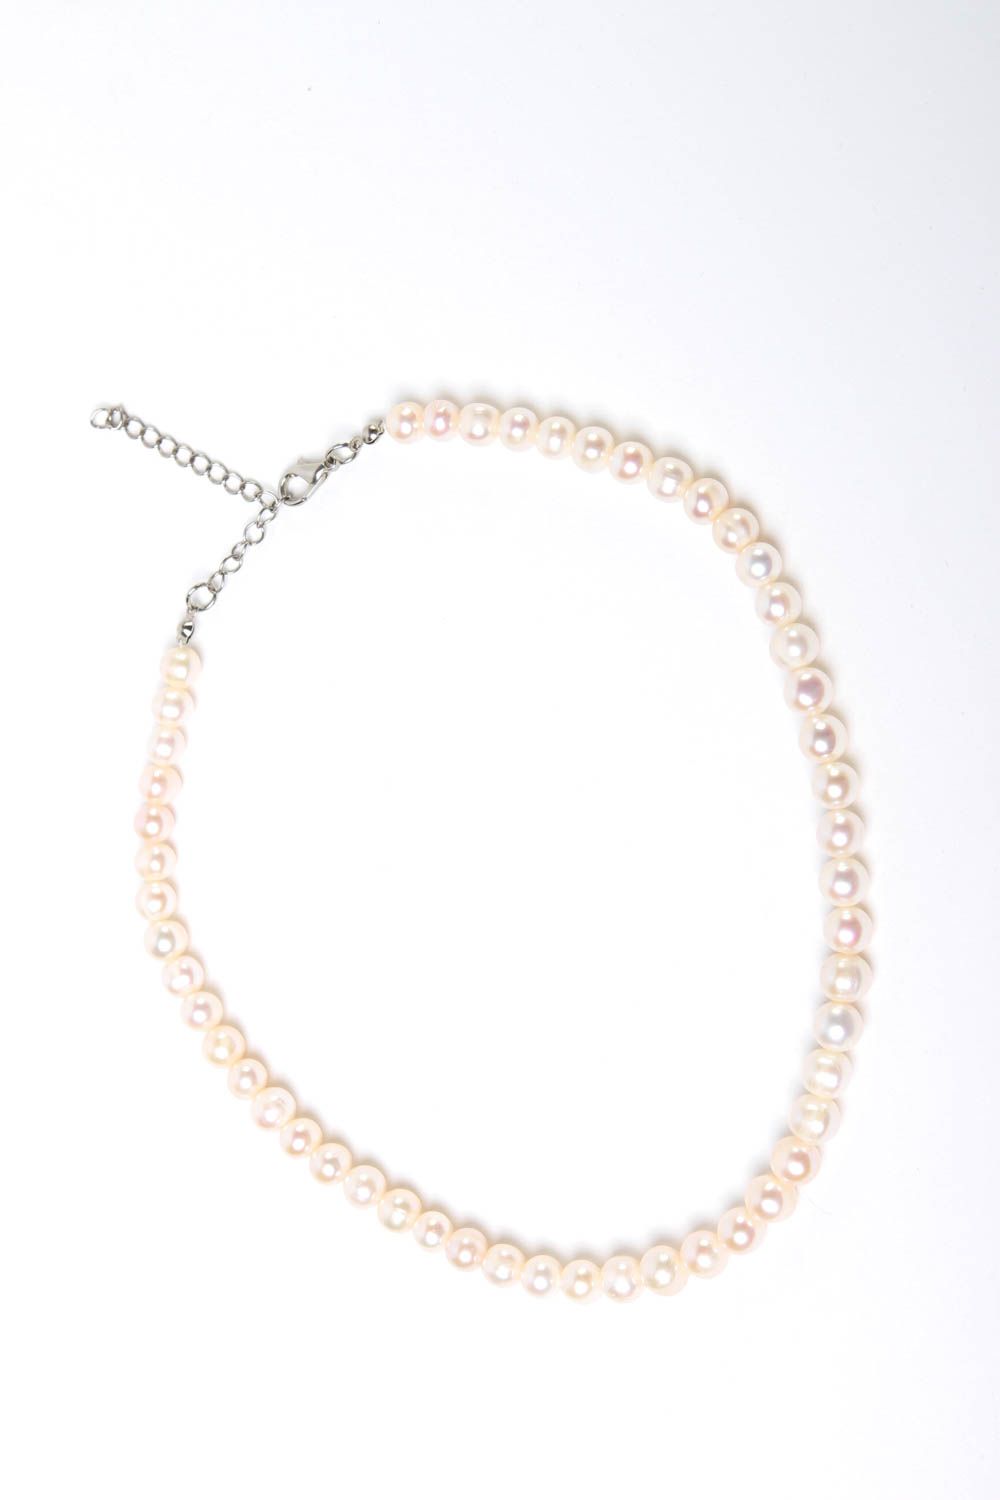 Handmade elegant necklace designer stylish accessory jewelry for women photo 2